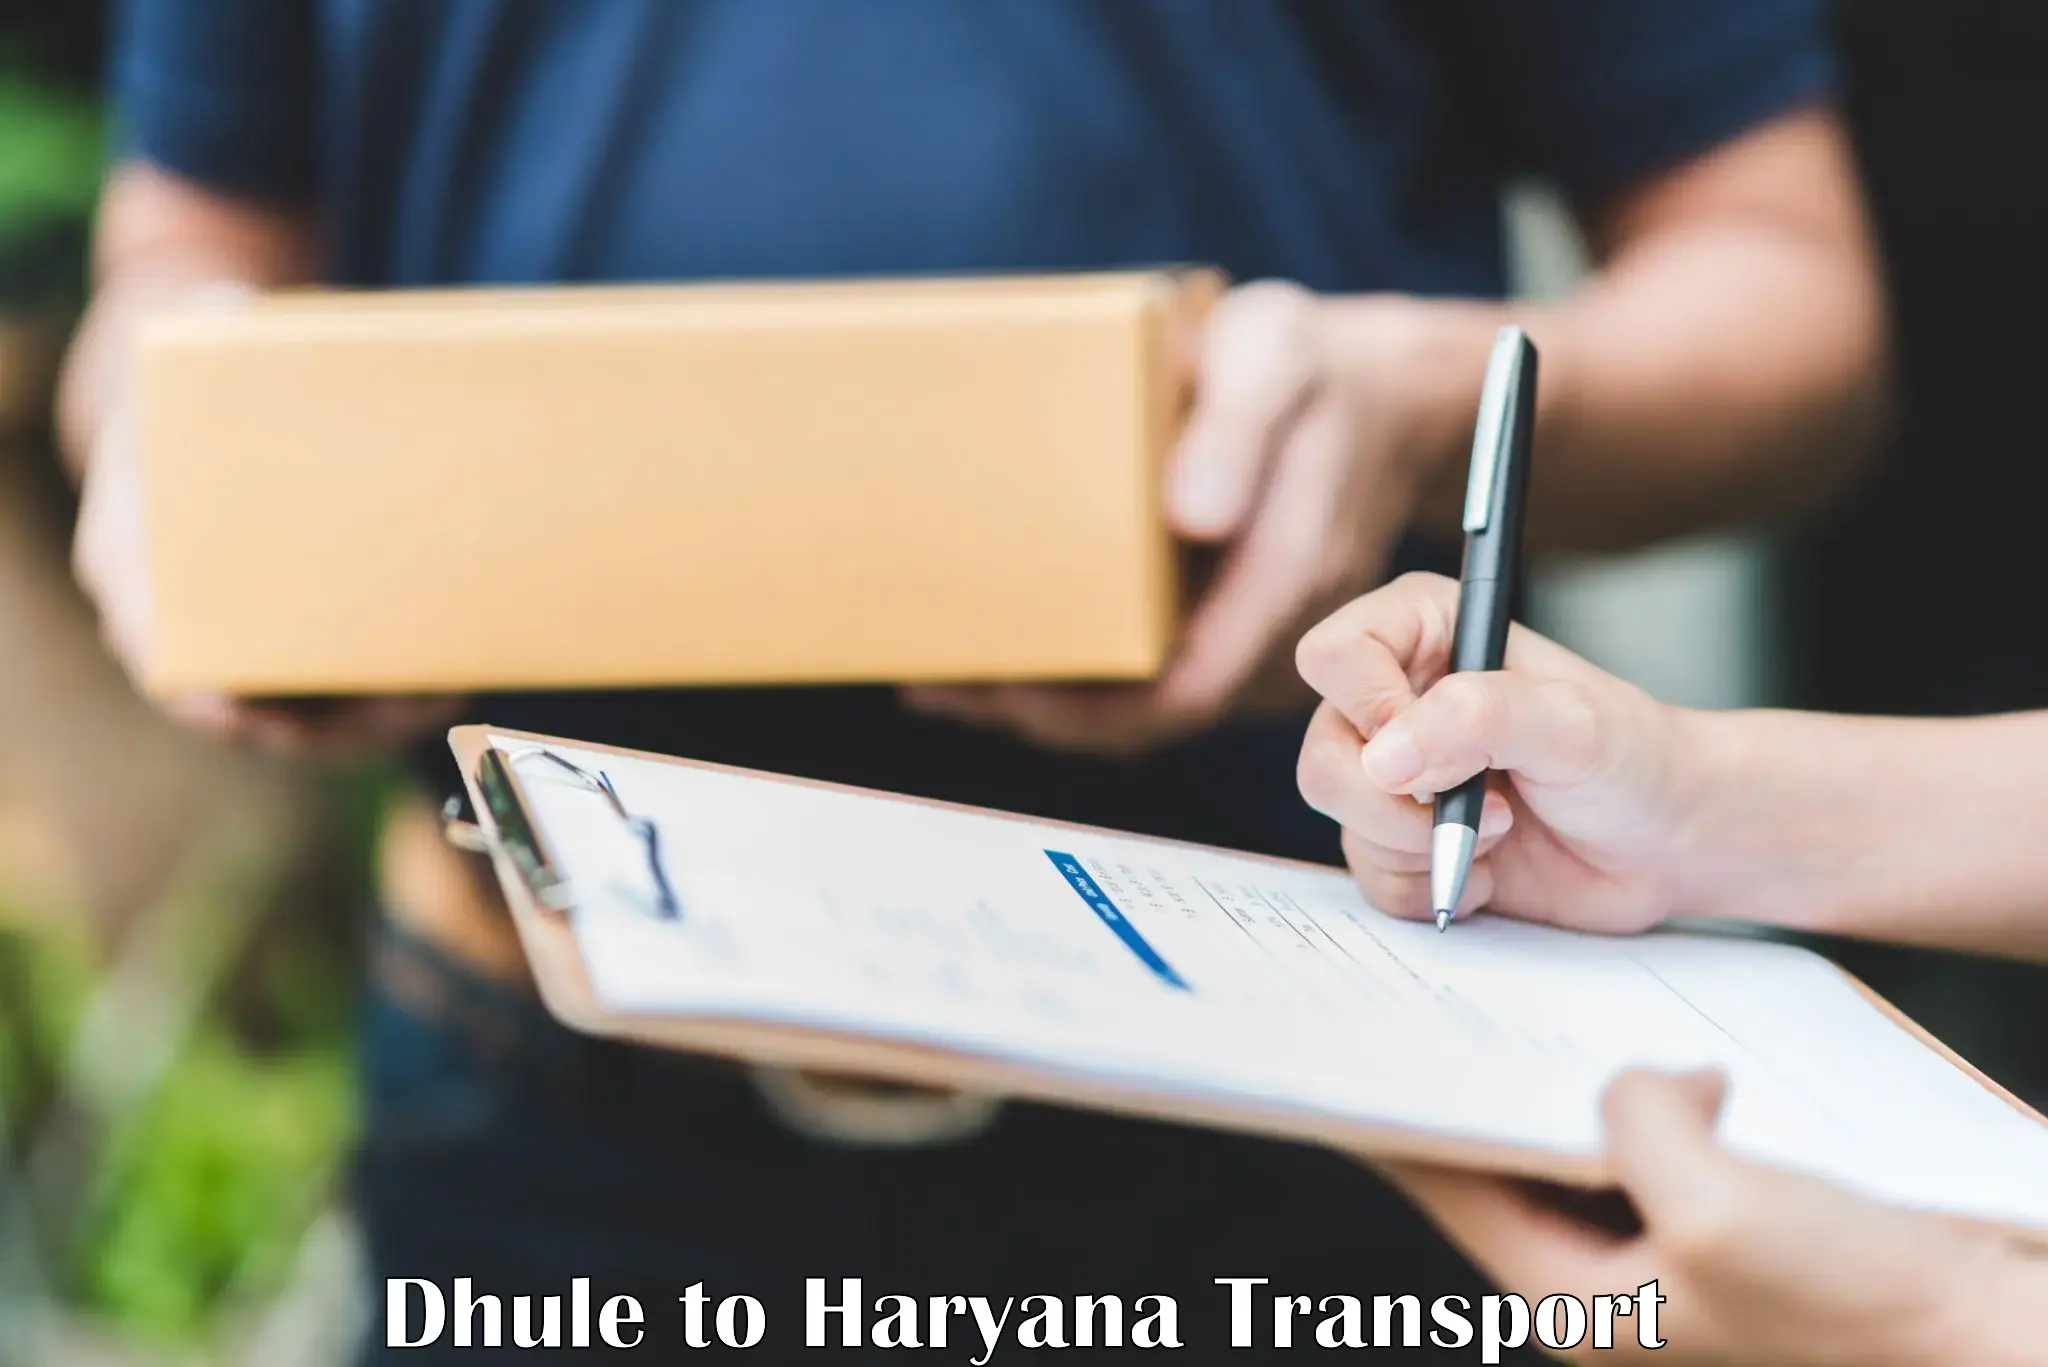 Transport in sharing Dhule to Hansi